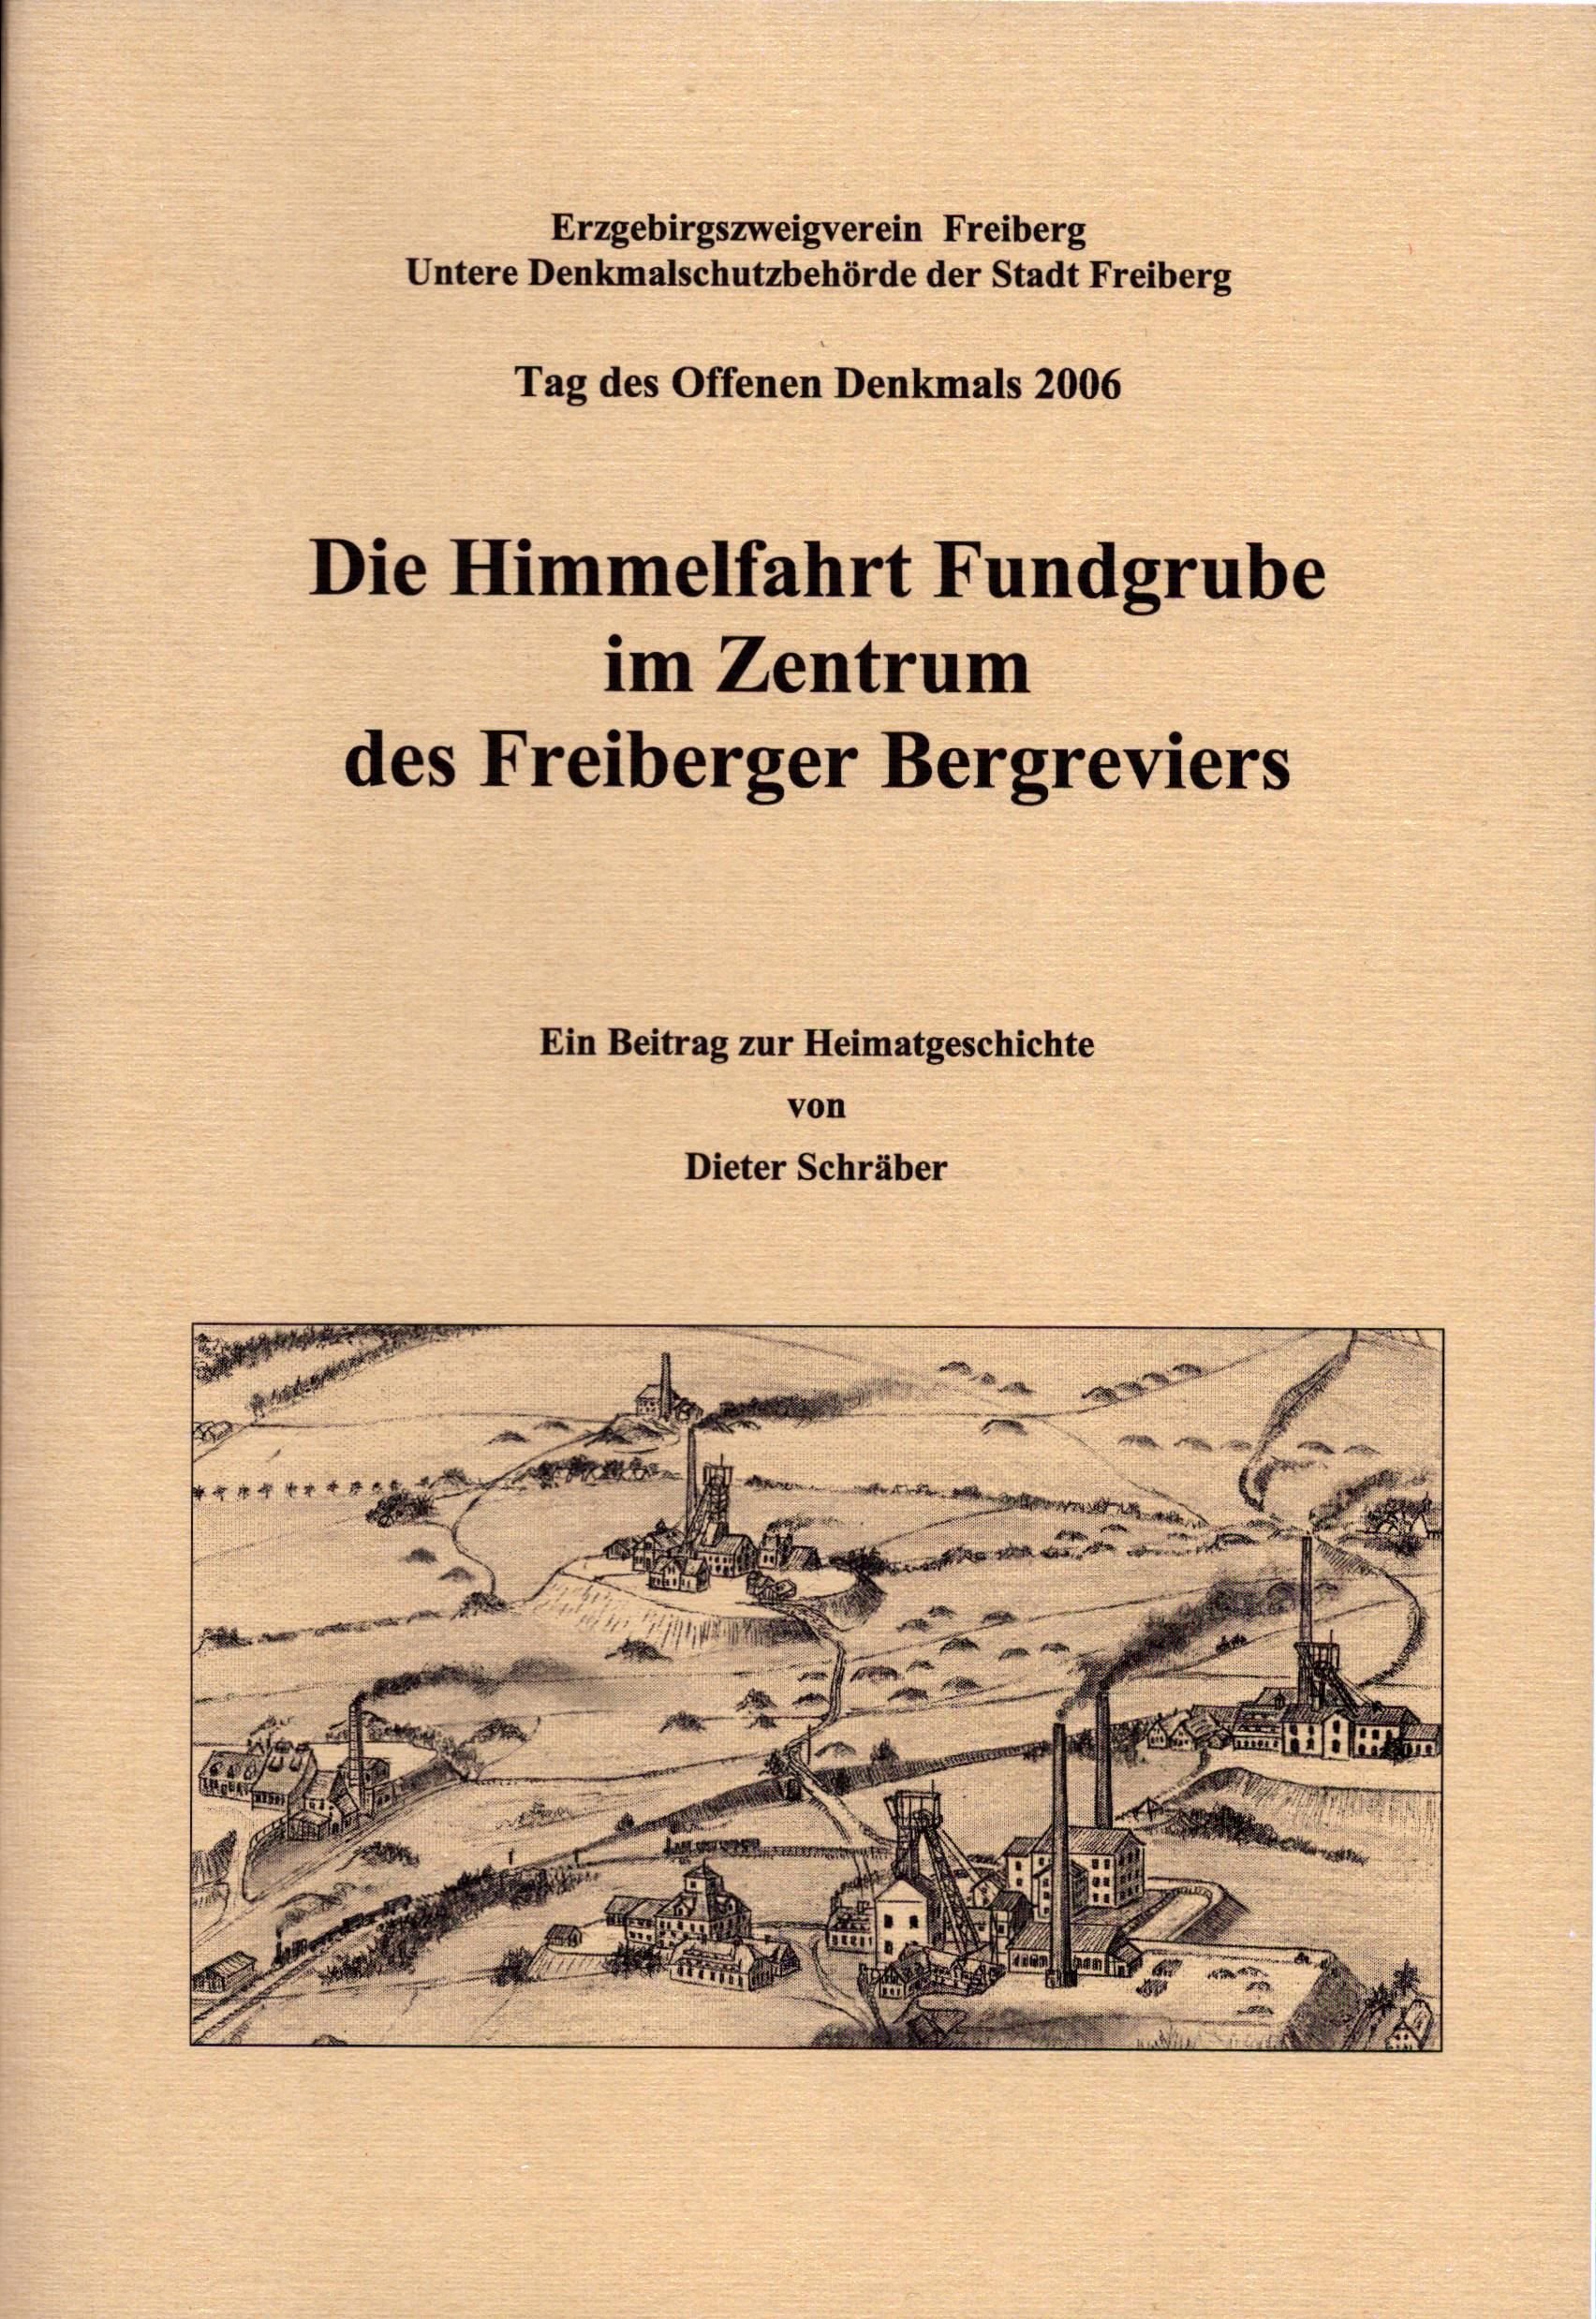 Die Himmelfahrt Fundgrube im Zentrum des Freiberger Bergreviers (Archiv SAXONIA-FREIBERG-STIFTUNG CC BY-NC-SA)